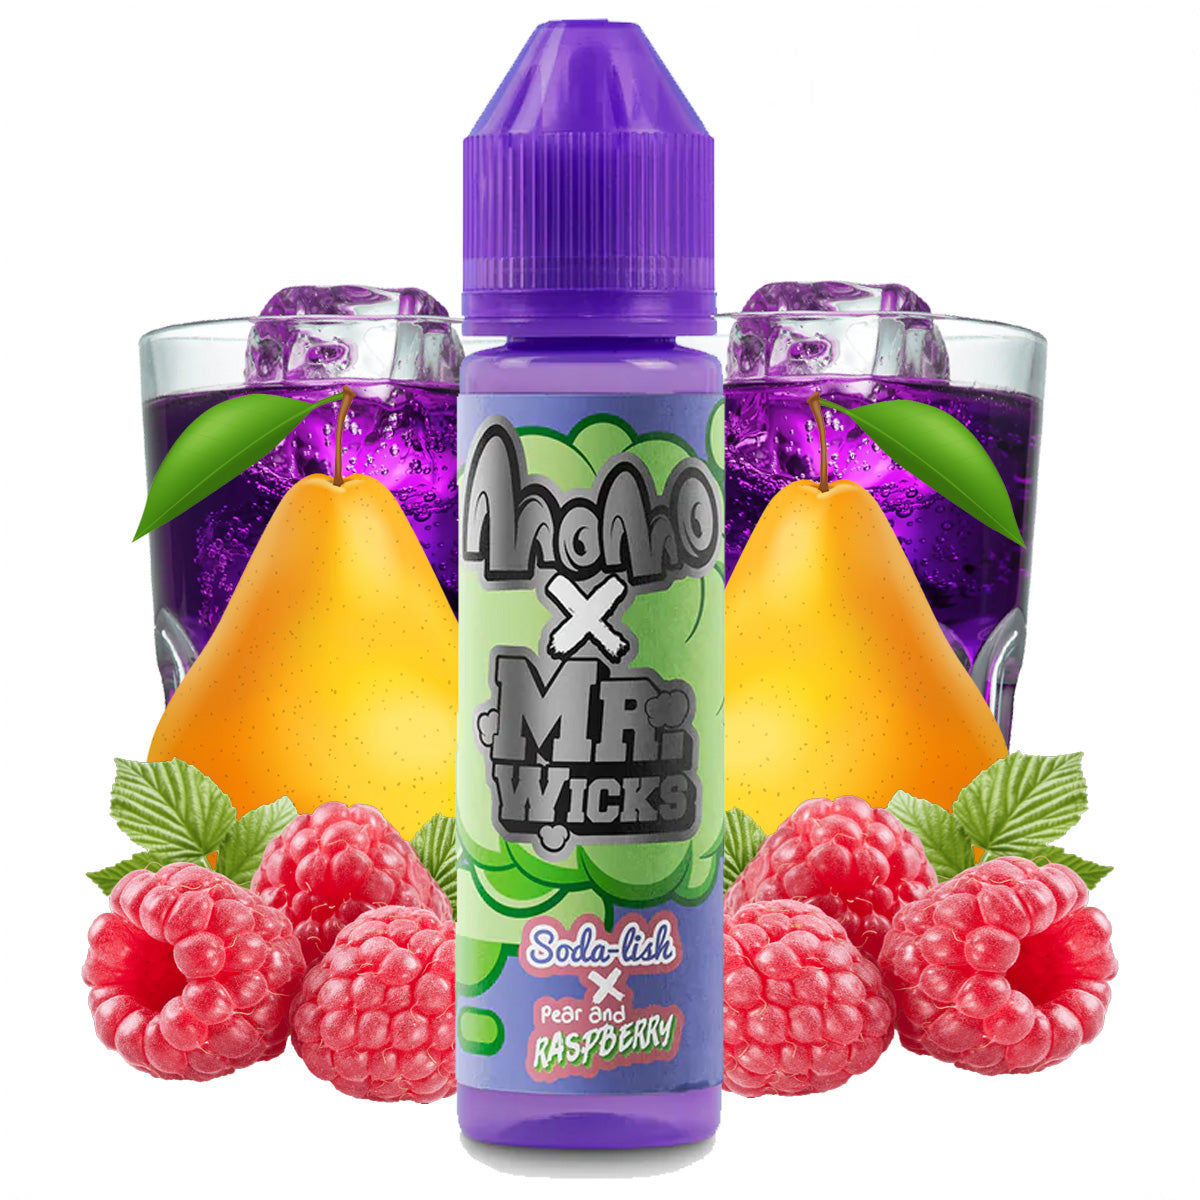 Momo X Mr Wicks - Soda-Lish X Pear And Raspberry 50ml Shortfill